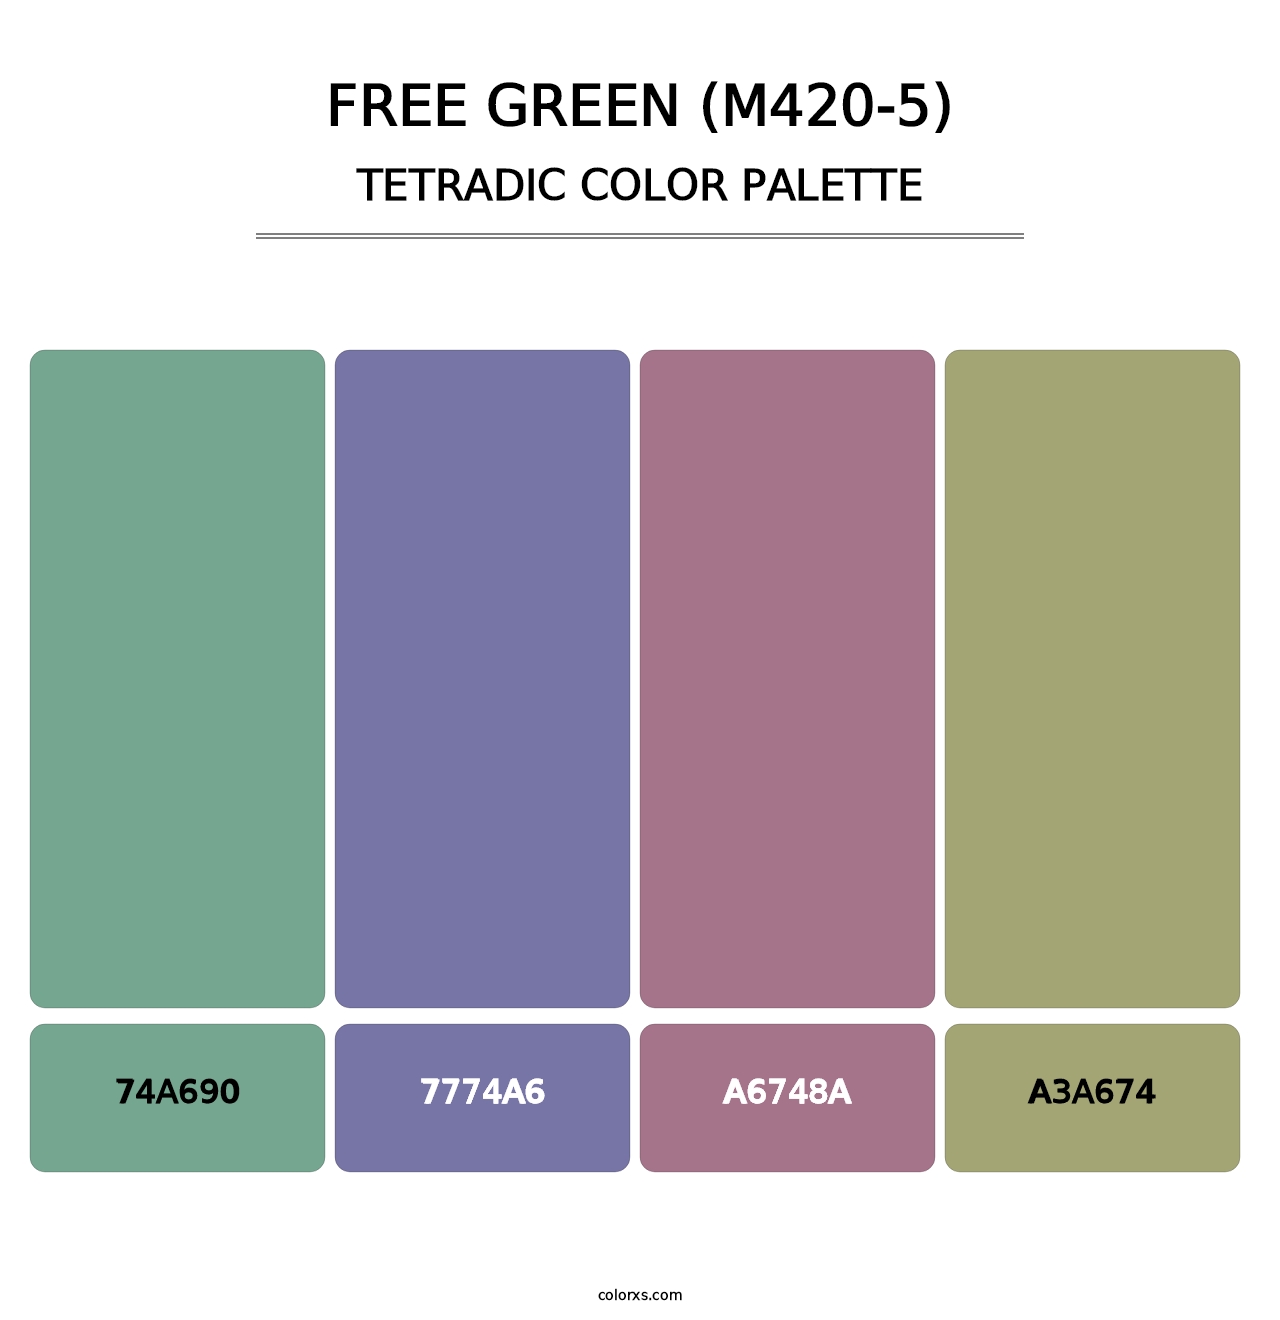 Free Green (M420-5) - Tetradic Color Palette